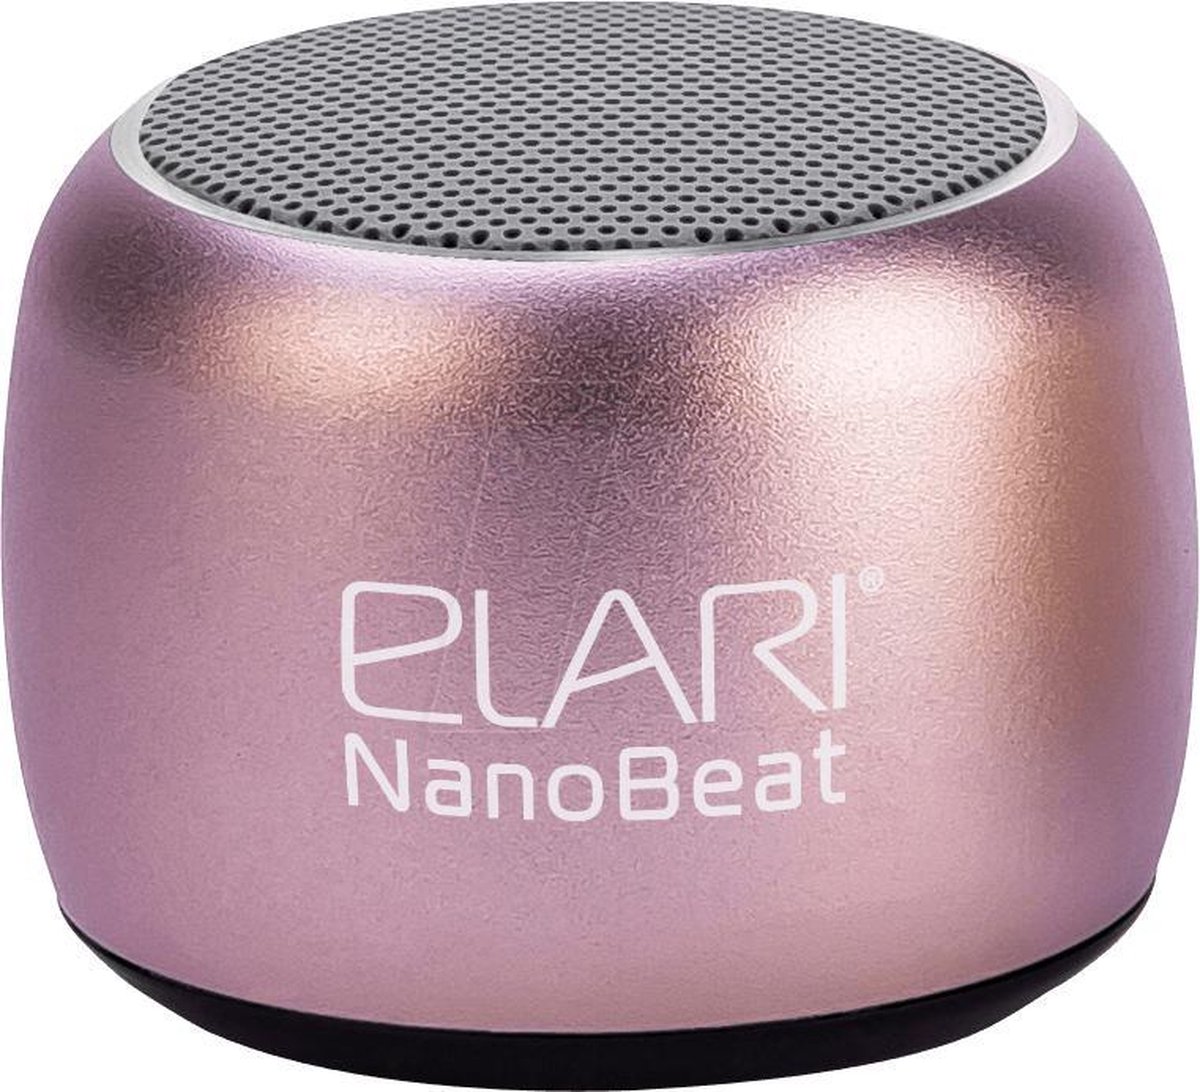 Elari Nanobeat Mini Bluetooth speaker Pink